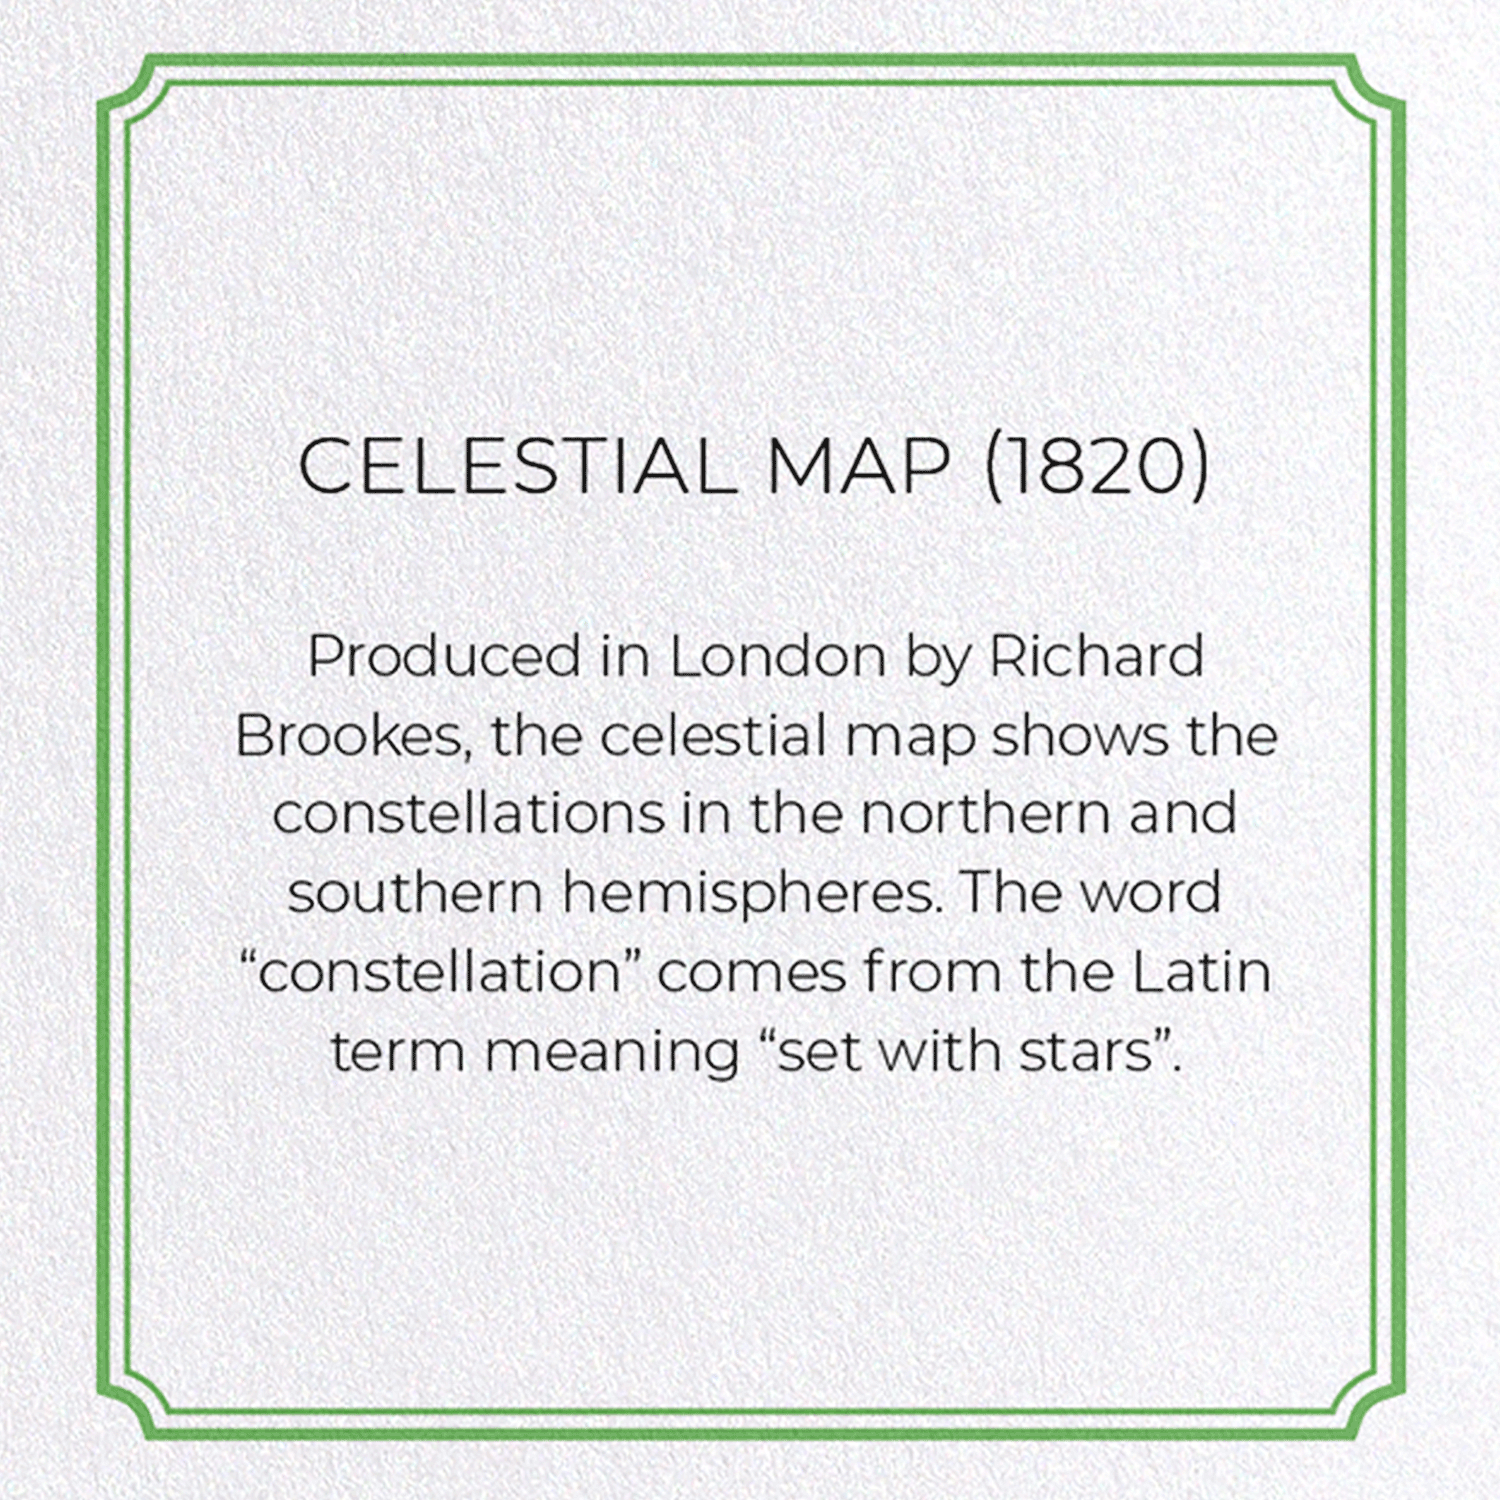 CELESTIAL MAP (1820)